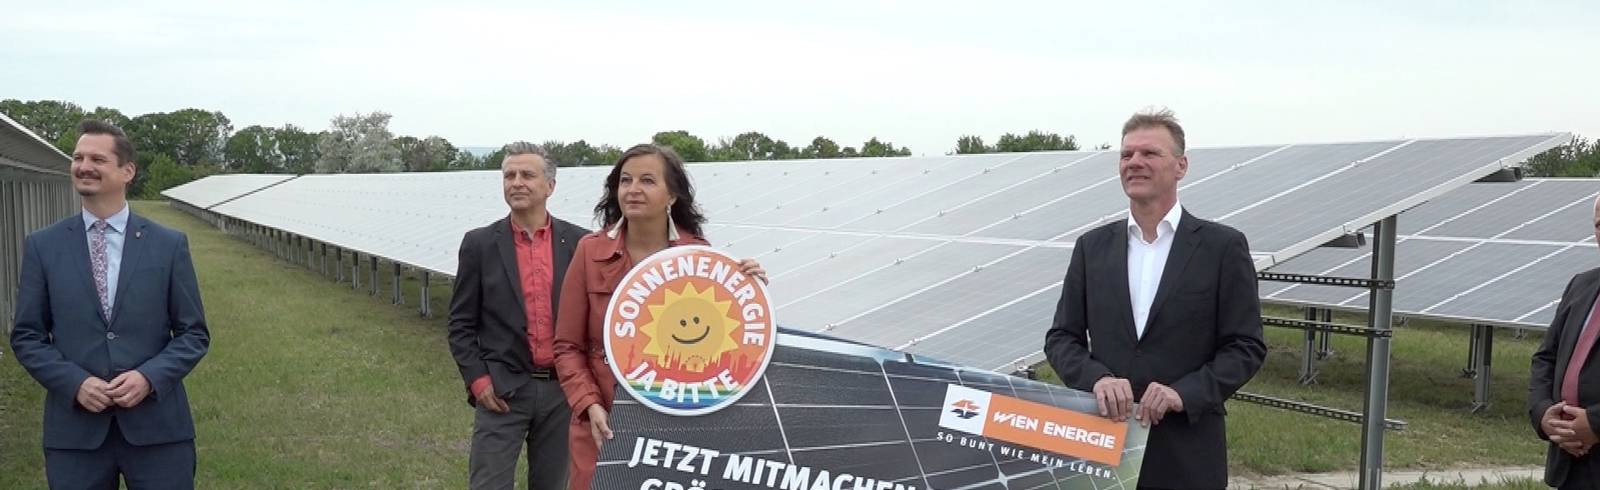 Wiens größtes Bürger-Solarkraftwerk startet